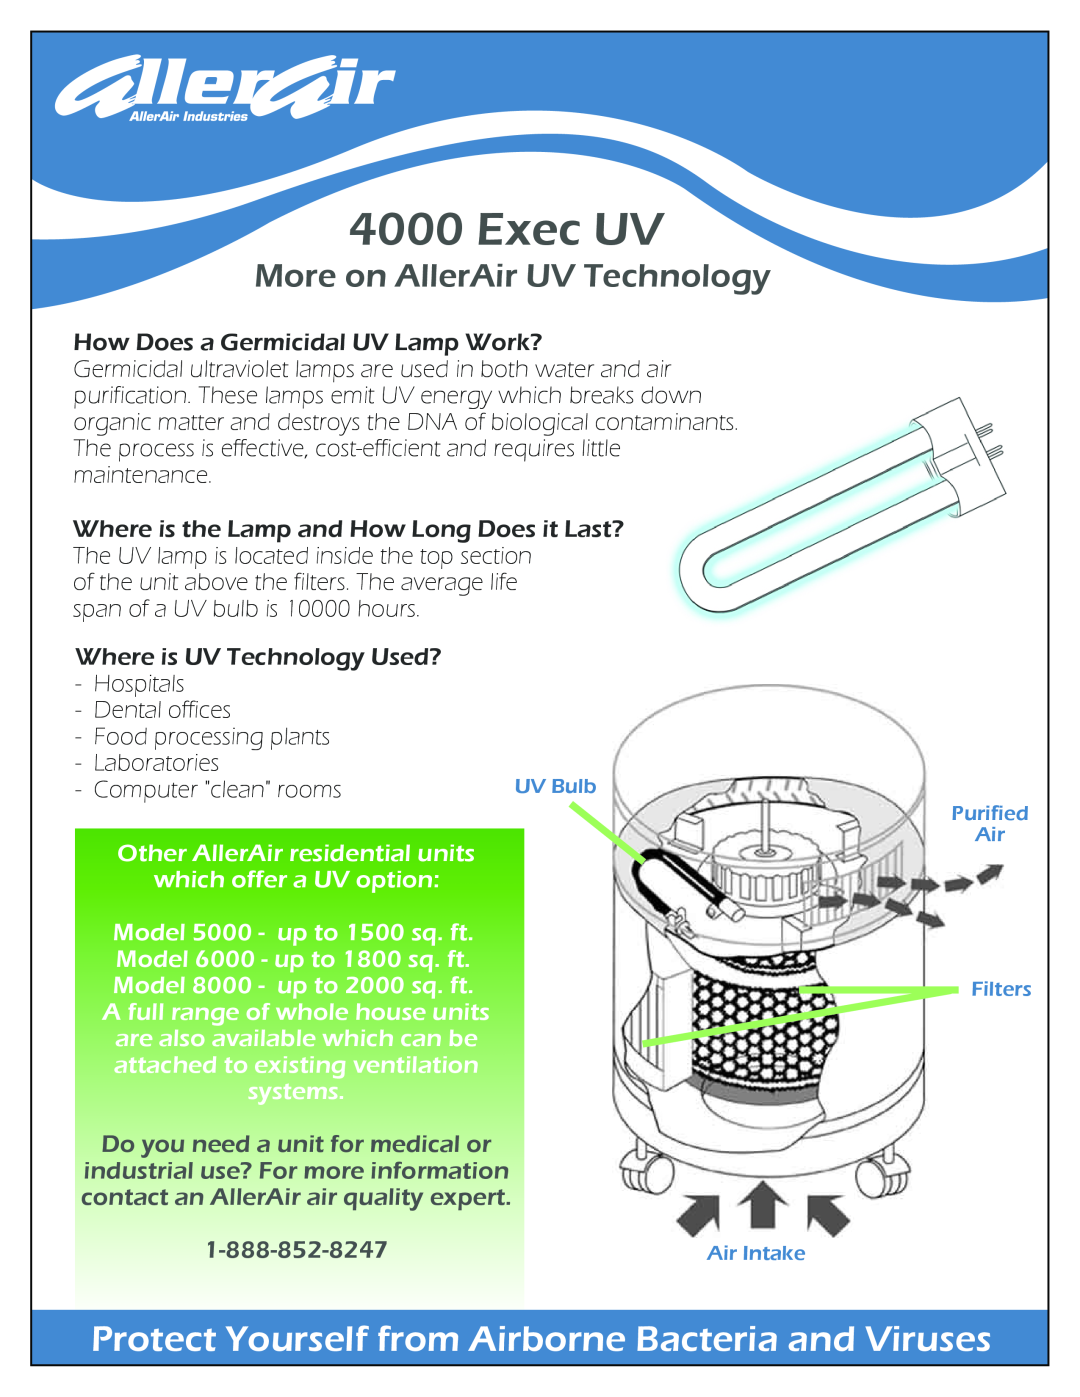 AllerAir 4000 Exec Uv manual More on AllerAir UV Technology, Exec UV, How Does a Germicidal UV Lamp Work? 